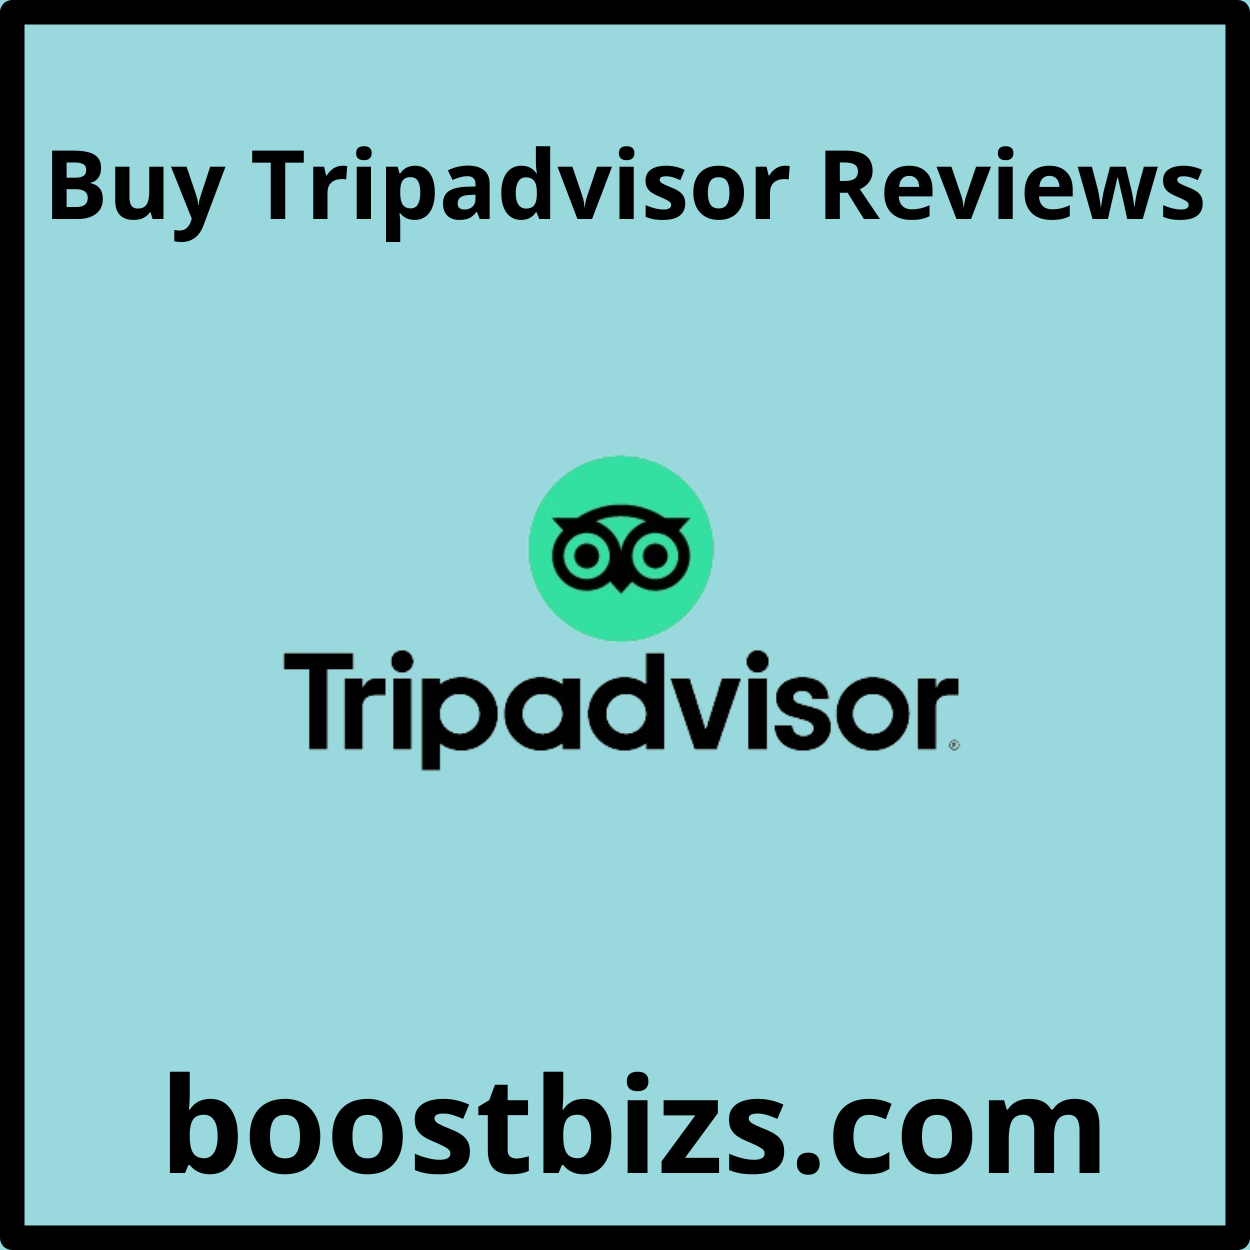 Buy TripAdvisor Reviews - BOOSTBIZS